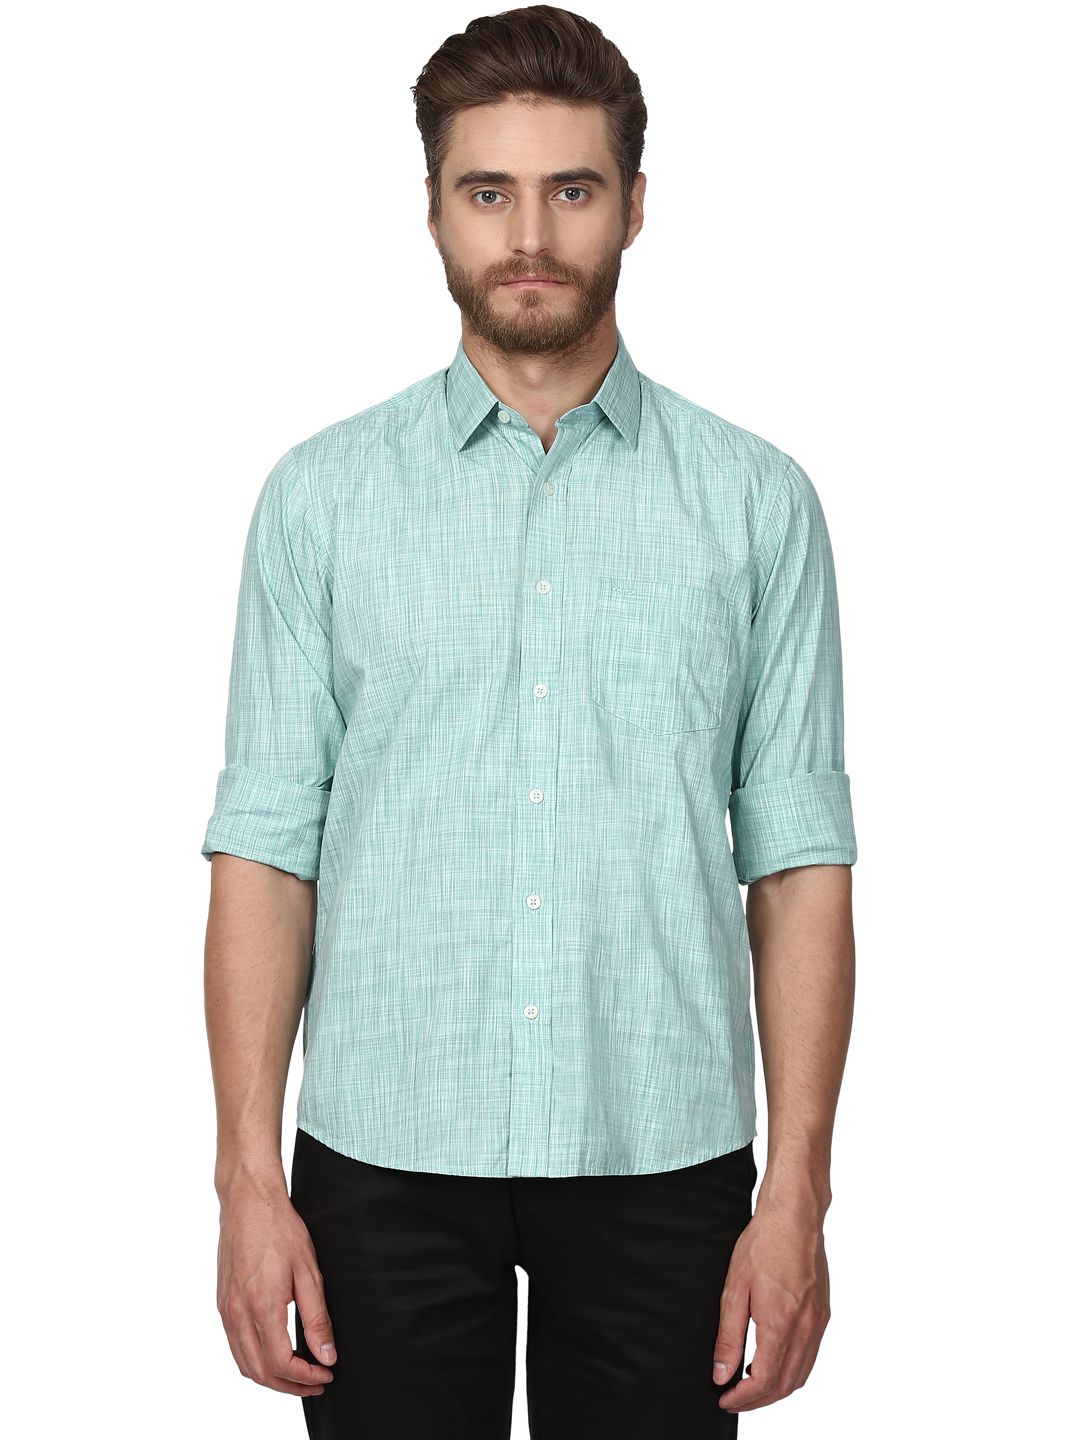 Colorplus Green Slim Fit Shirt - Buy Colorplus Green Slim Fit Shirt ...